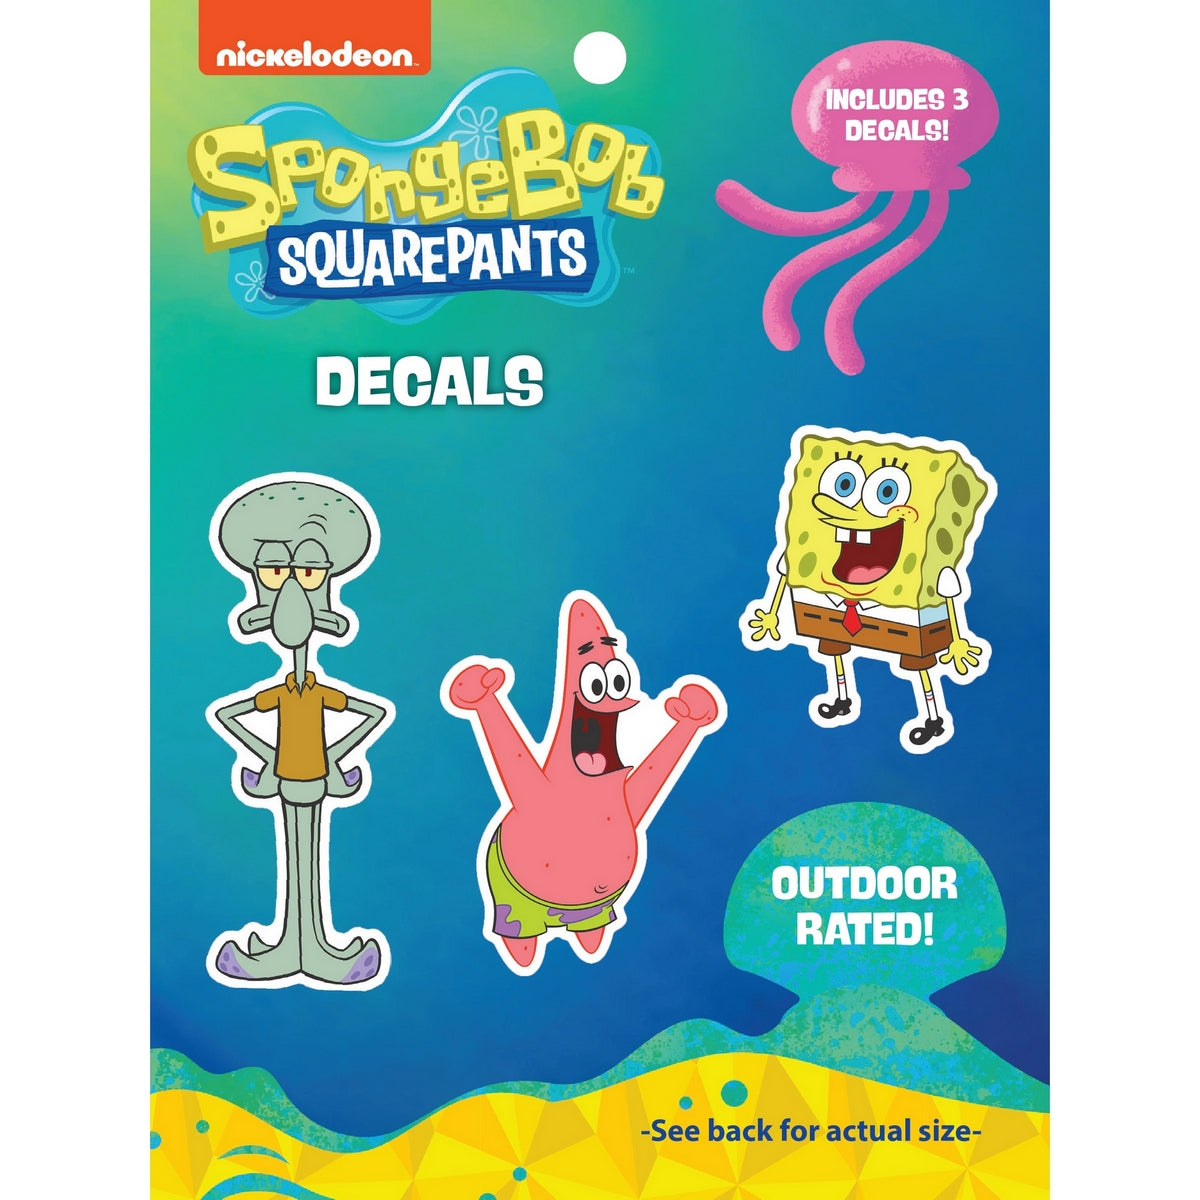 SpongeBob SquarePants and Friends Decals